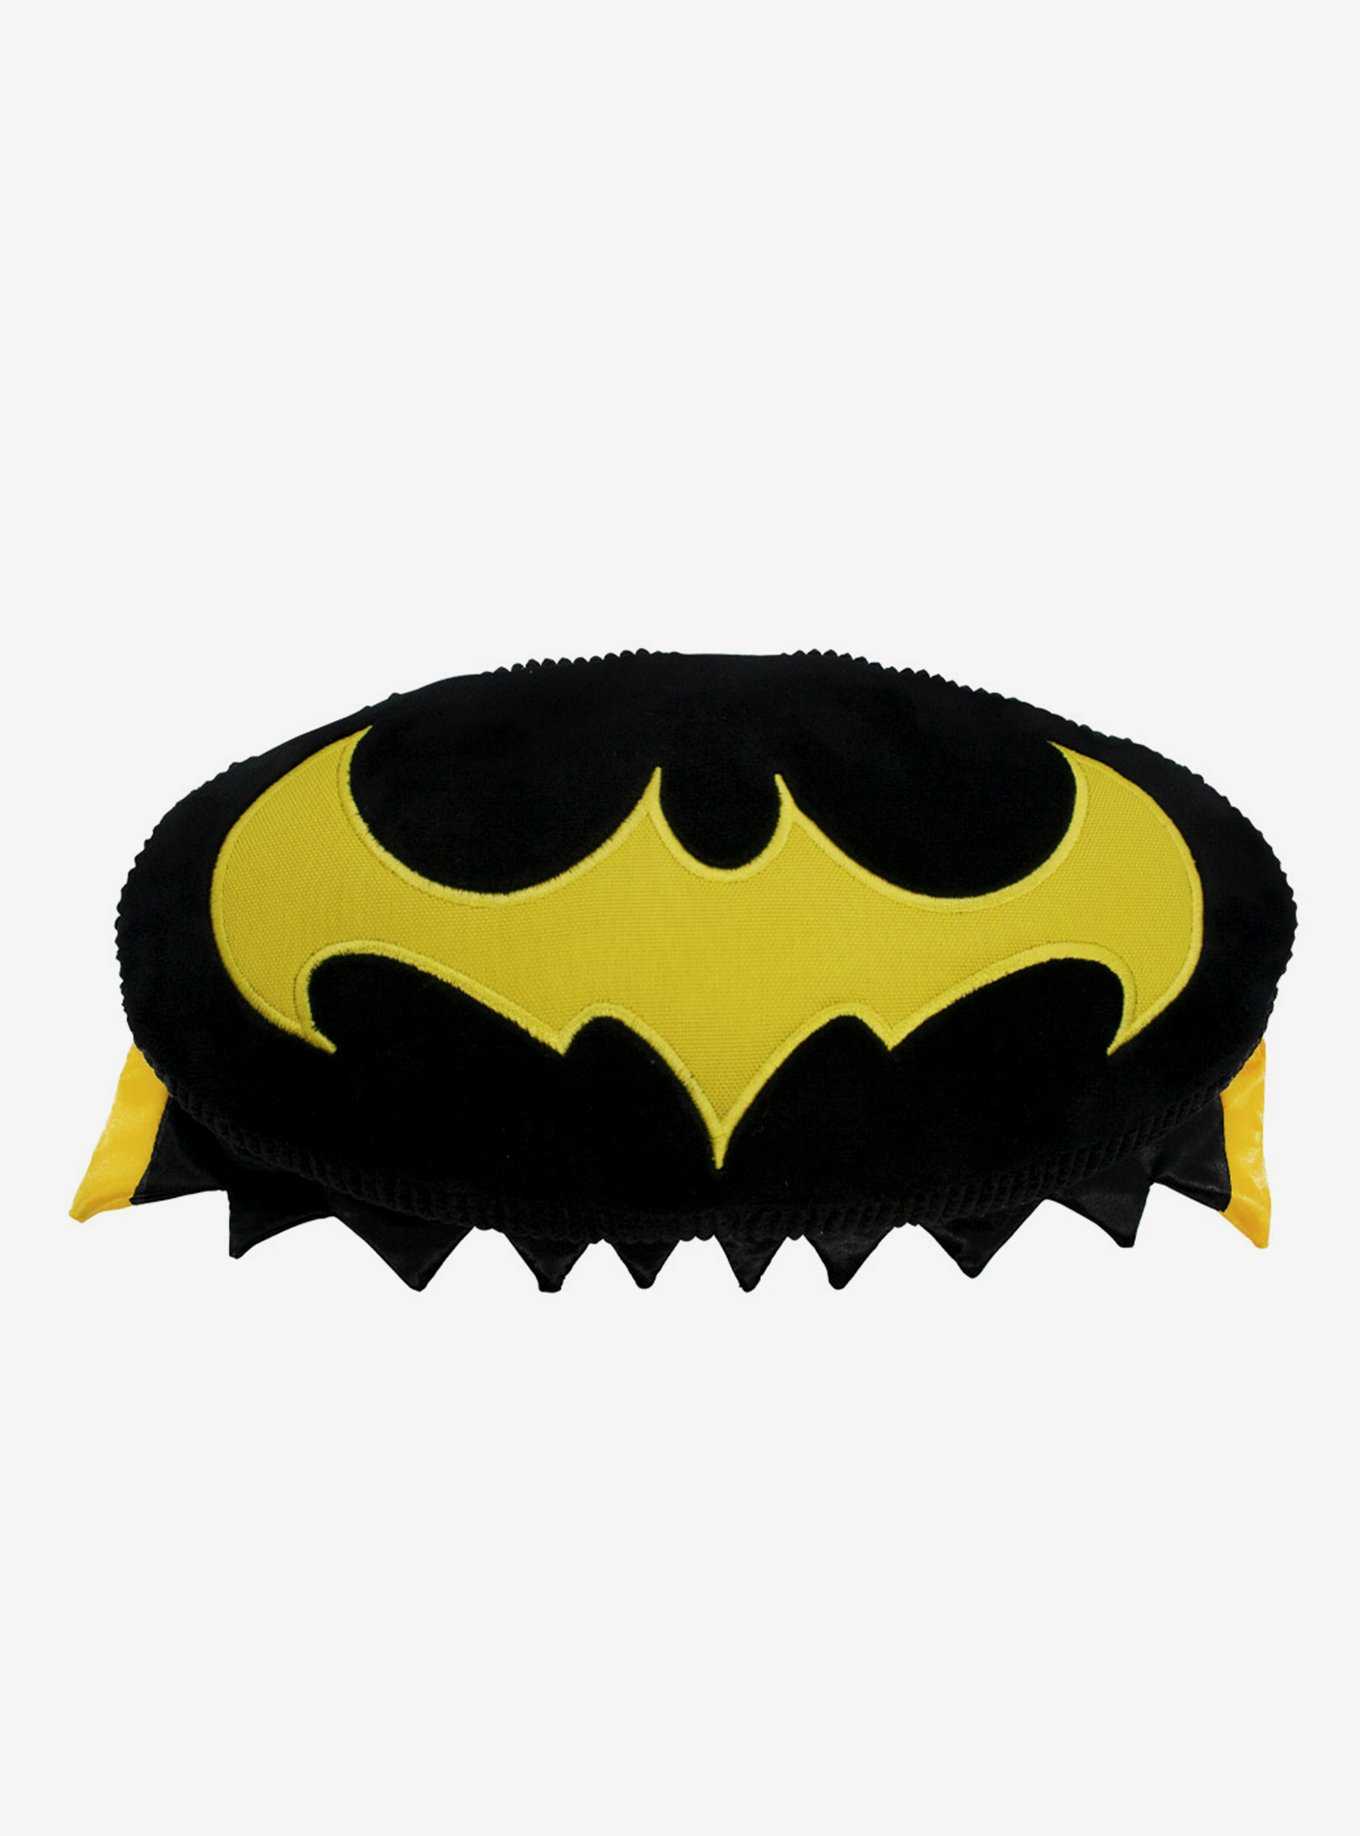 DC Comics Batman Ace the Bat Hound with Cape Plush Squeaker Dog Toy, , hi-res